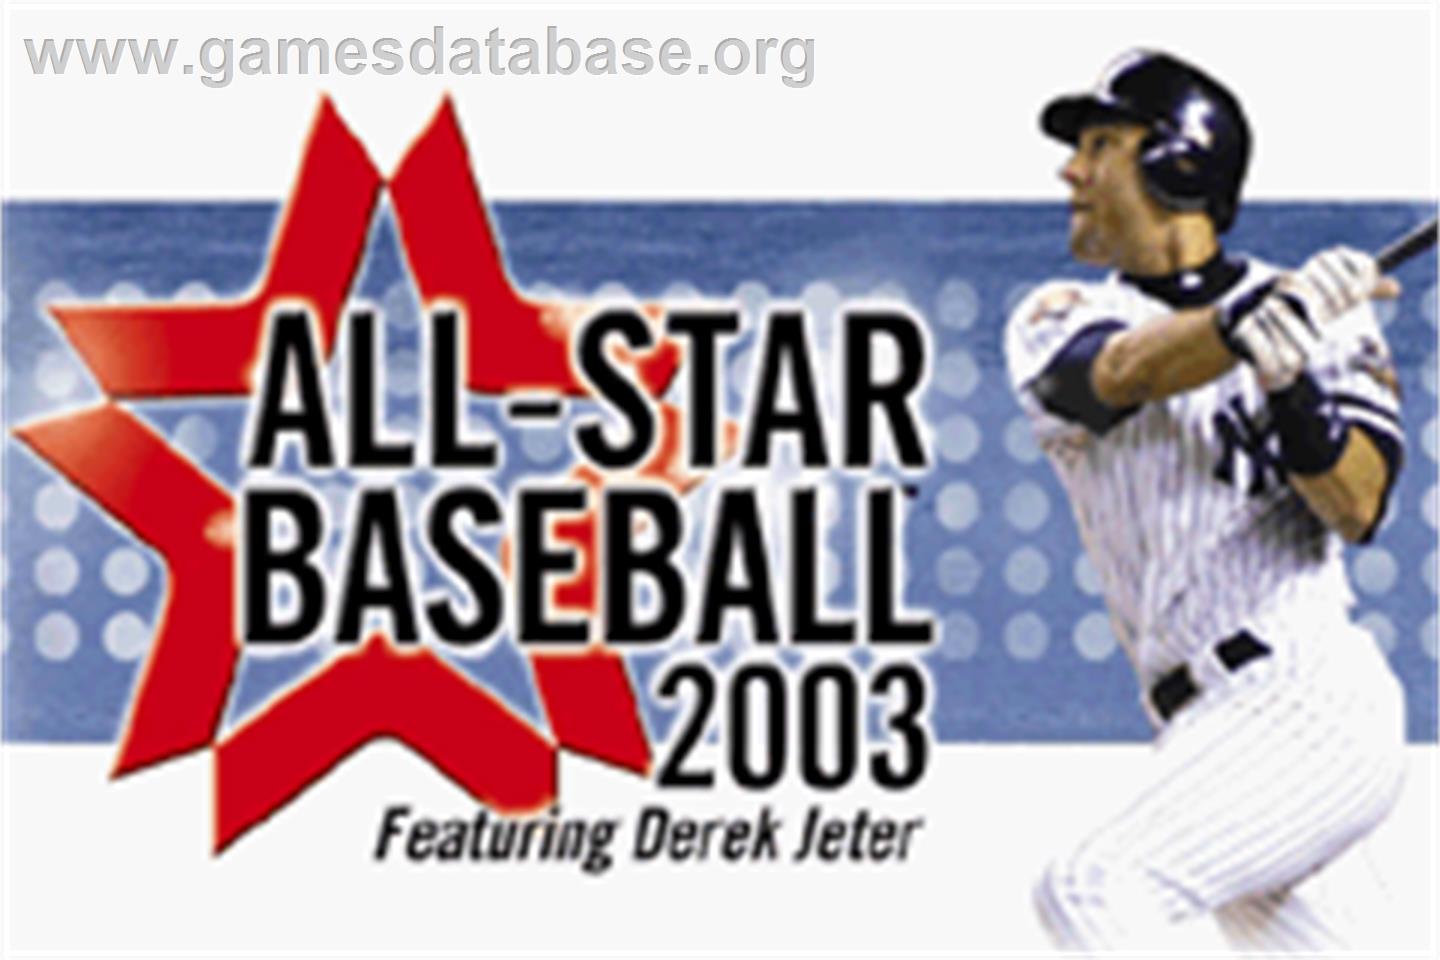 All-Star Baseball 2003 - Nintendo Game Boy Advance - Artwork - Title Screen